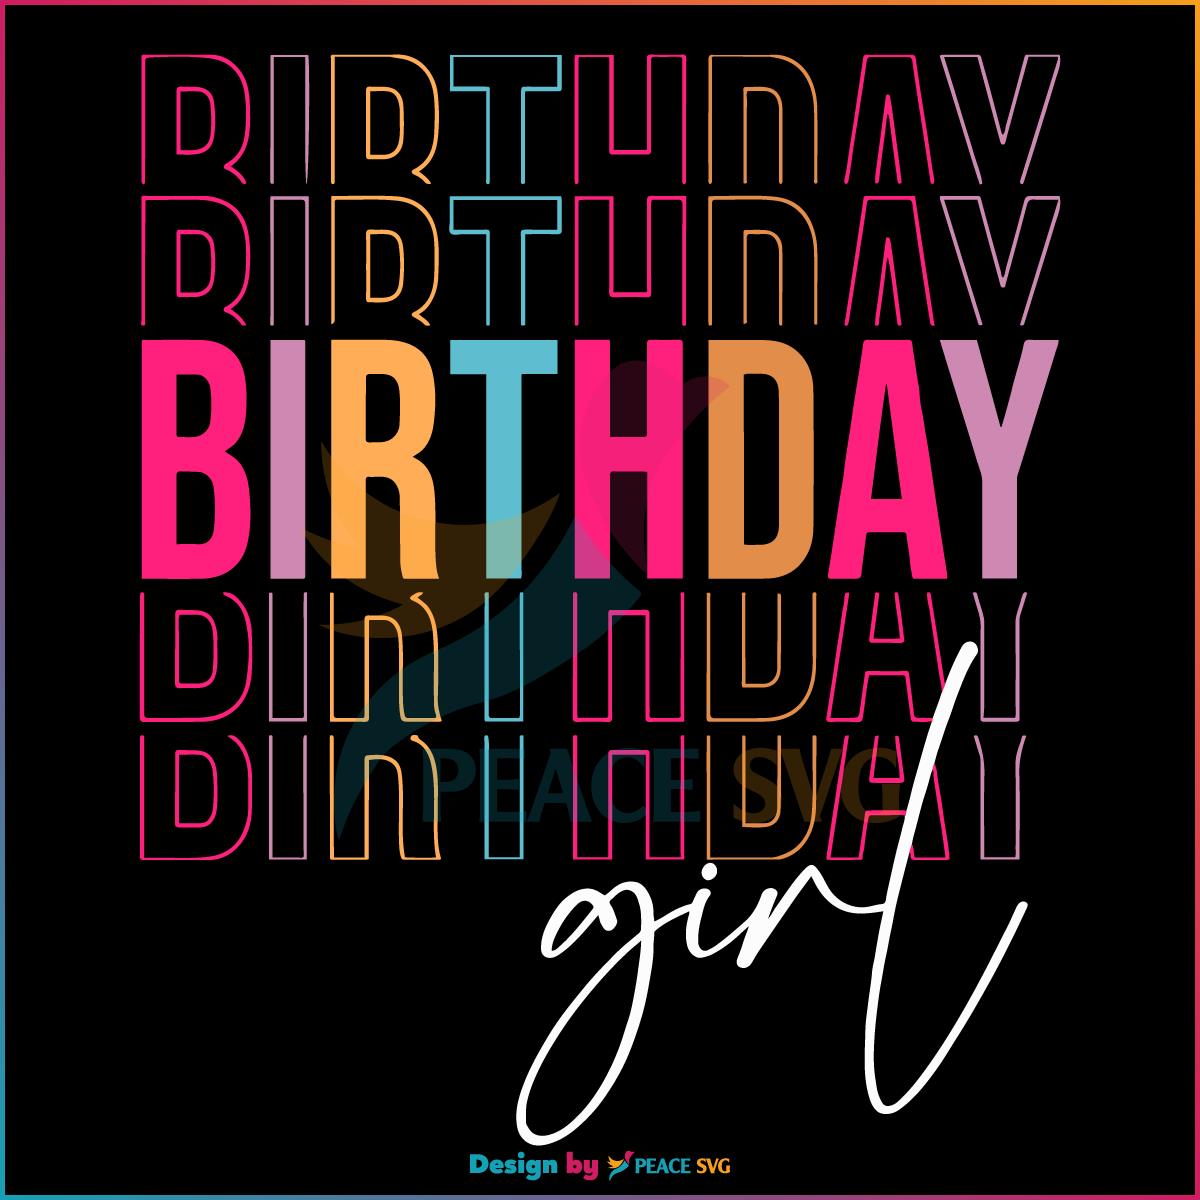 The Birthday Girl Birthday Party SVG